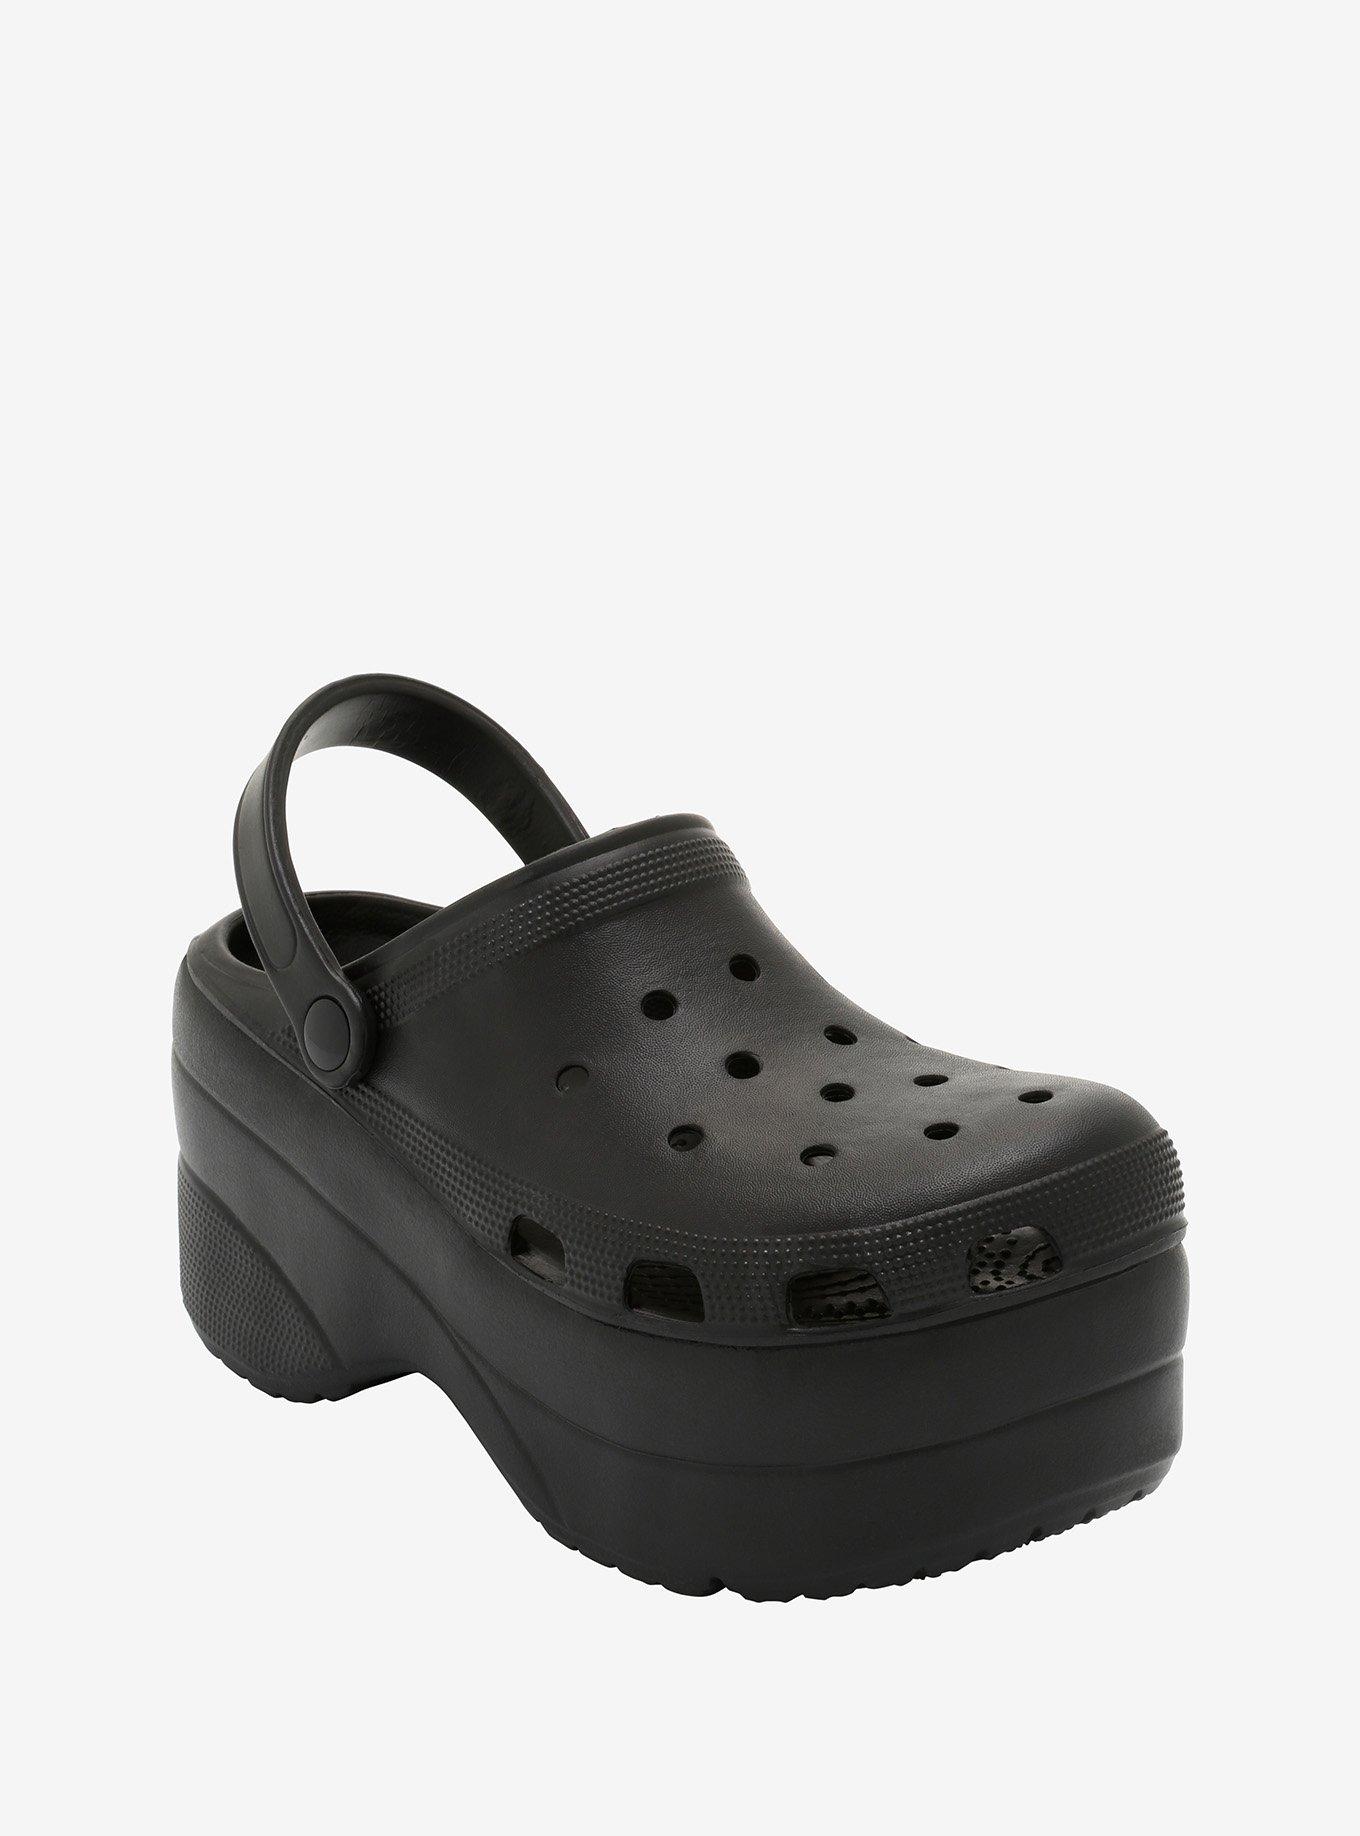 New Shrek Funny Crocs Clog Shoes Crocband Clog Comfortable For